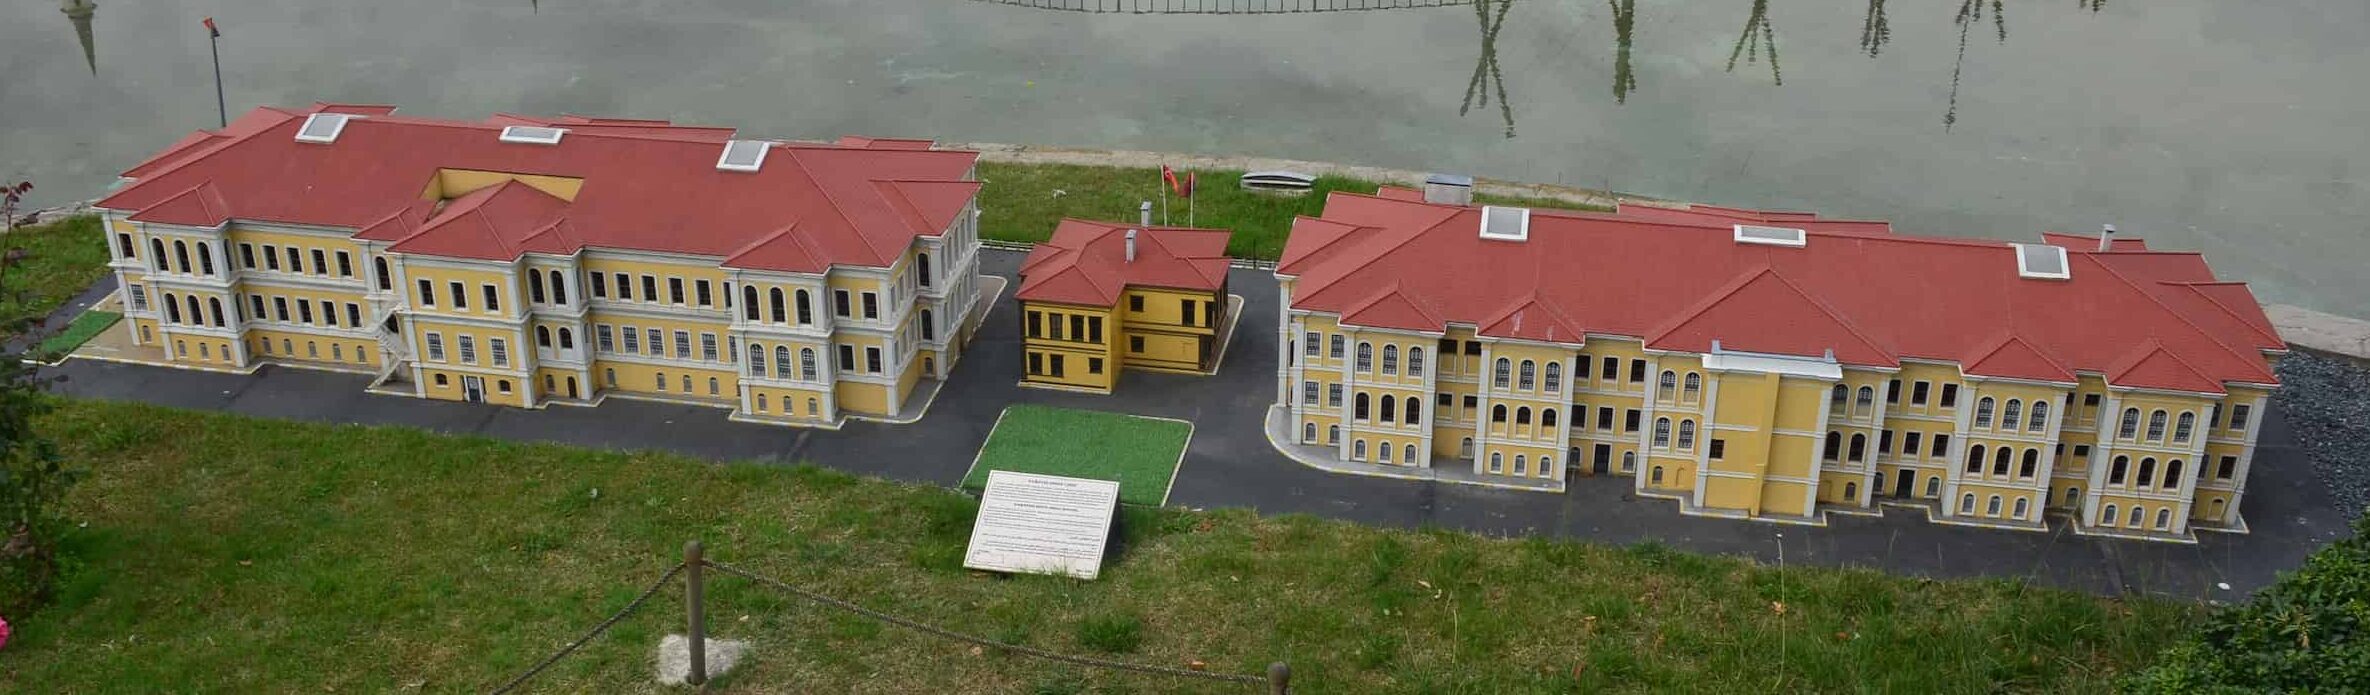 Model of Kabataş High School, Ortaköy, 20th century at Miniatürk in Istanbul, Turkey